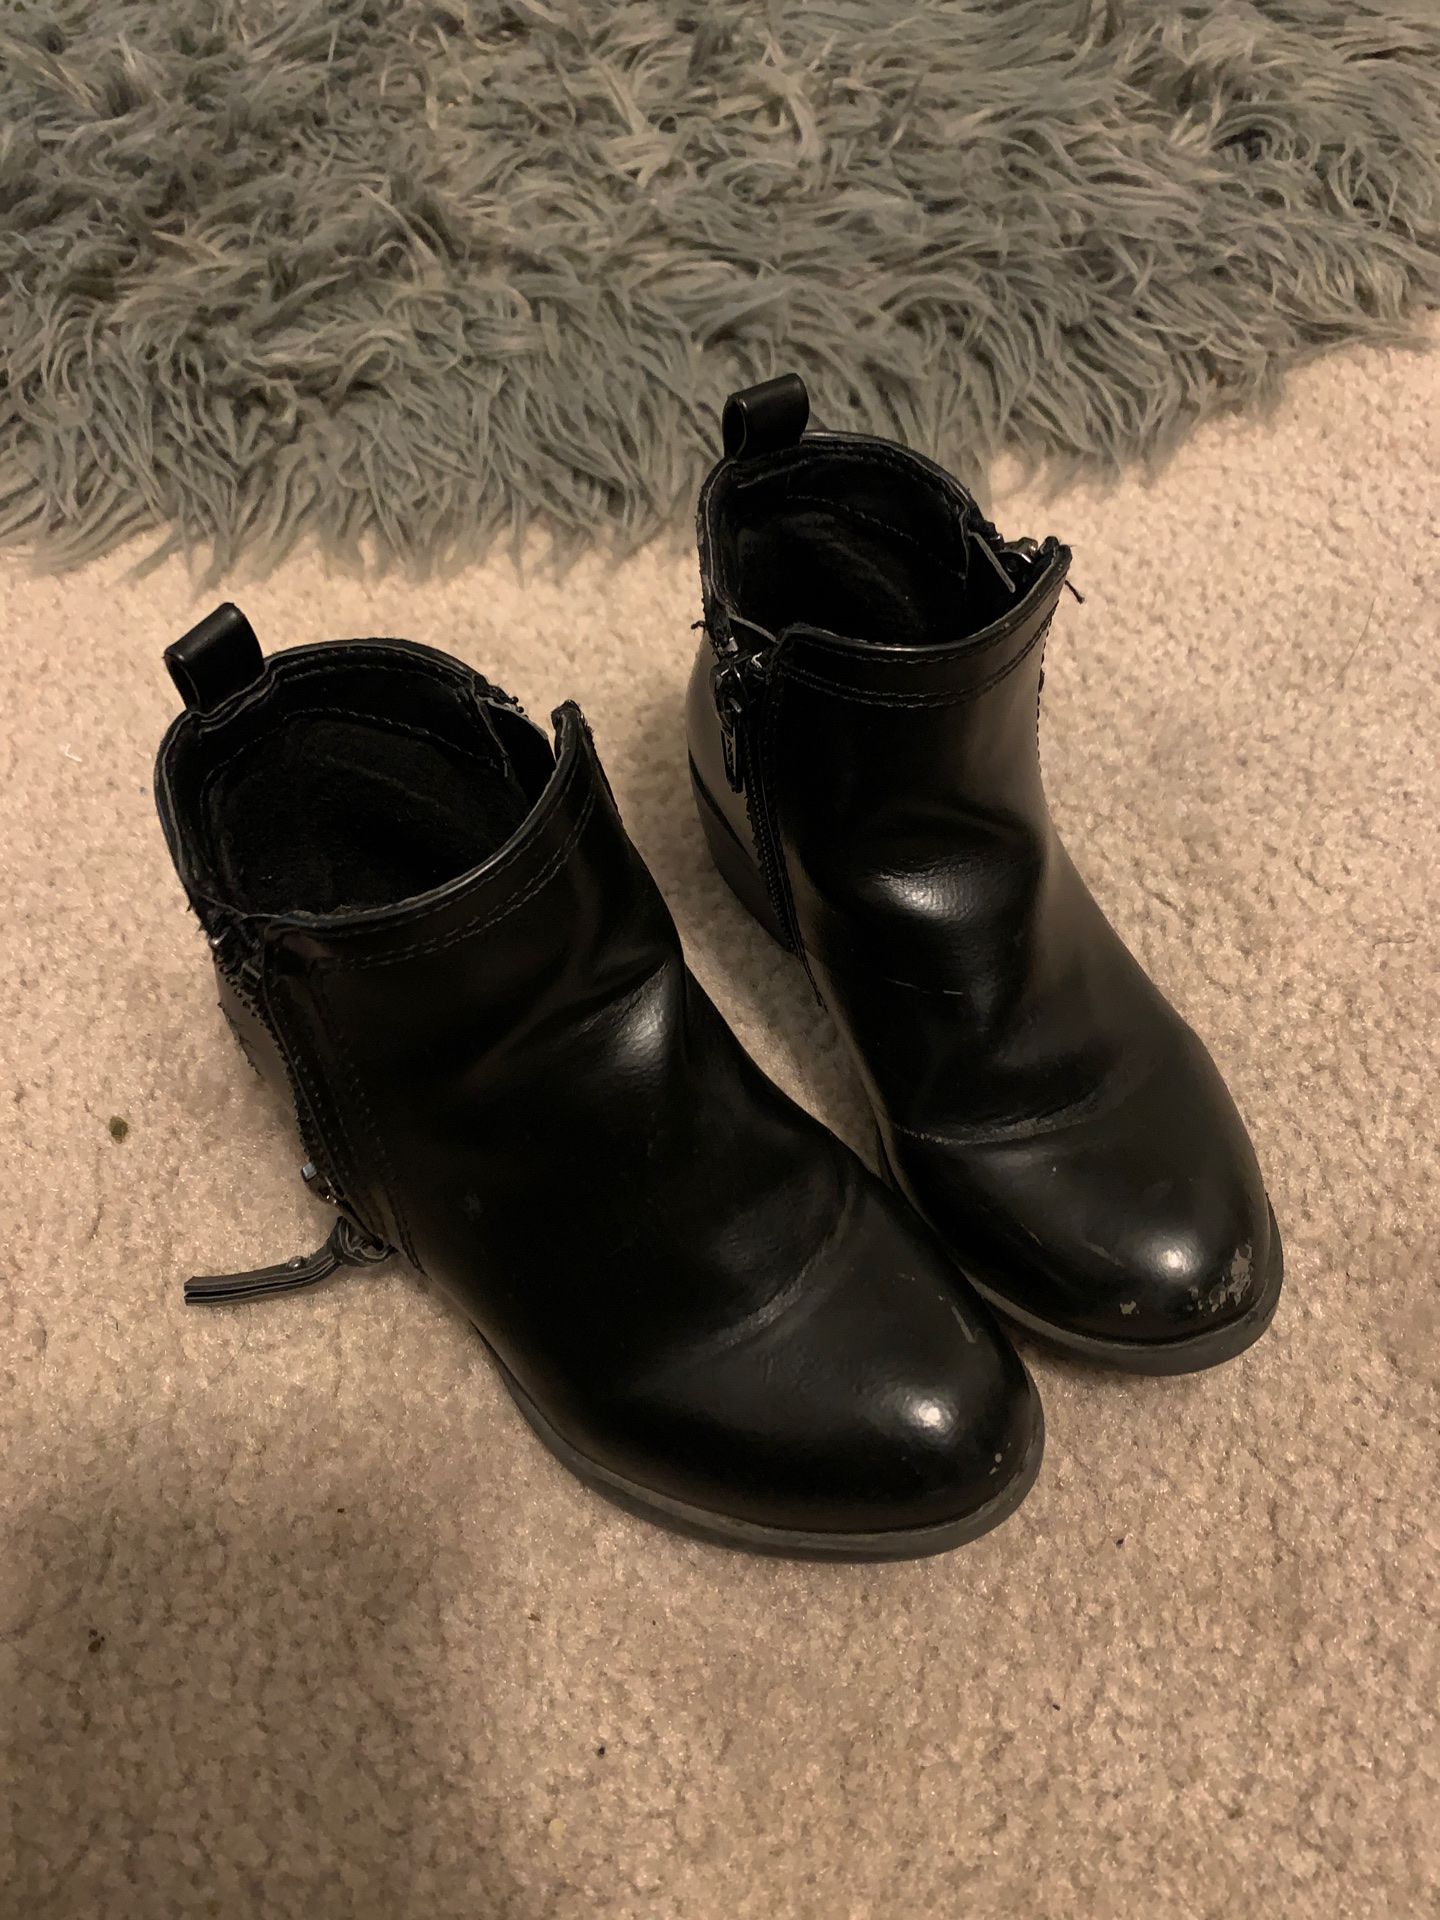 Nautica girls boots size 11